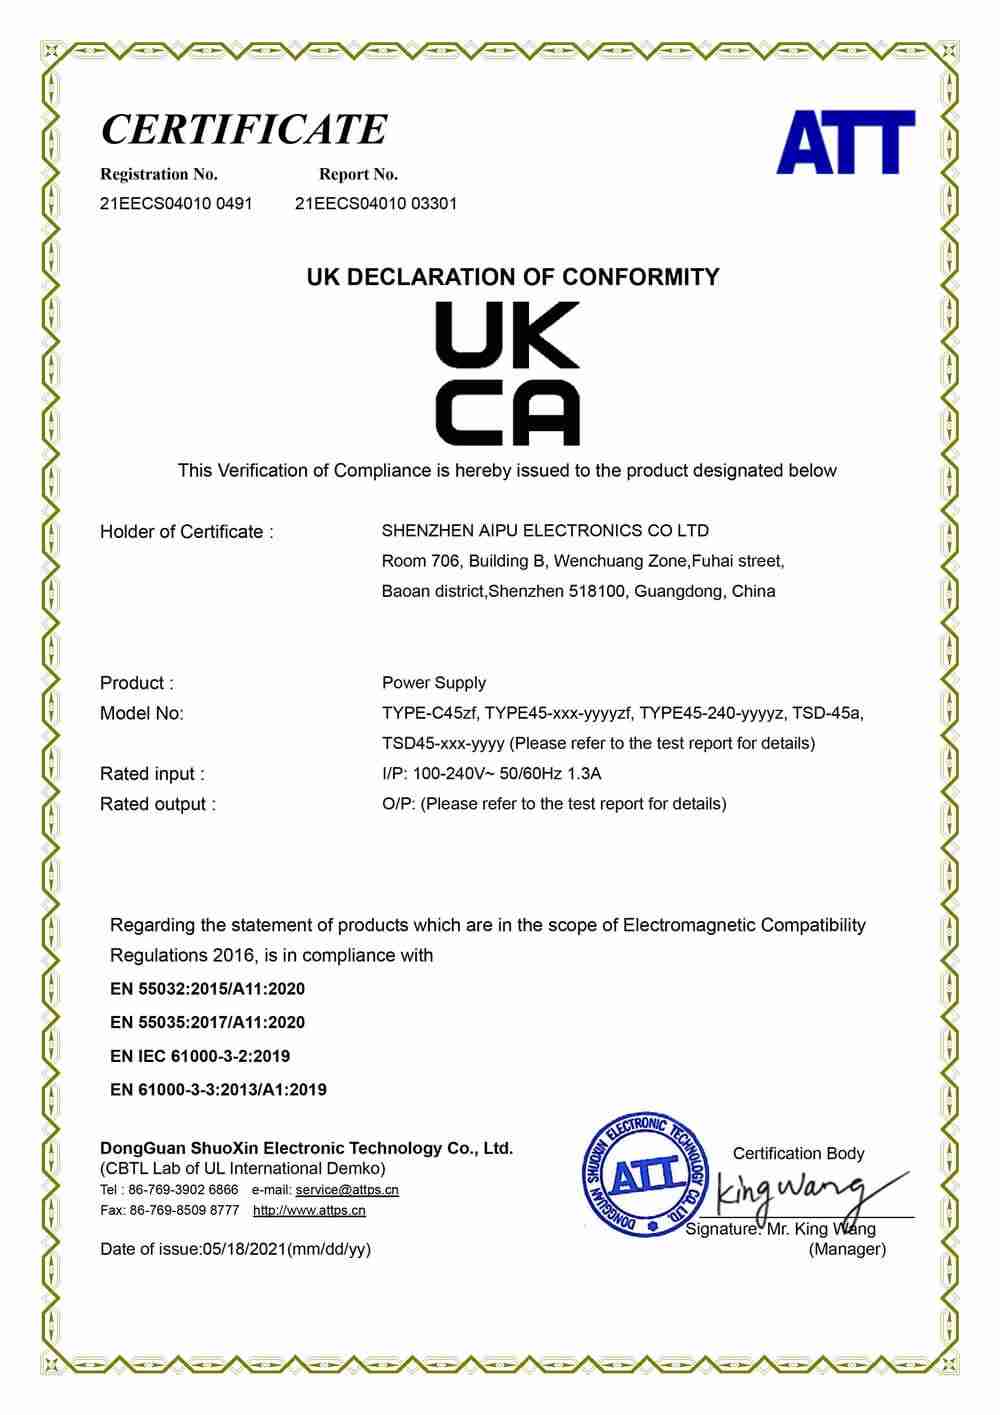 UKCA EMC certificate